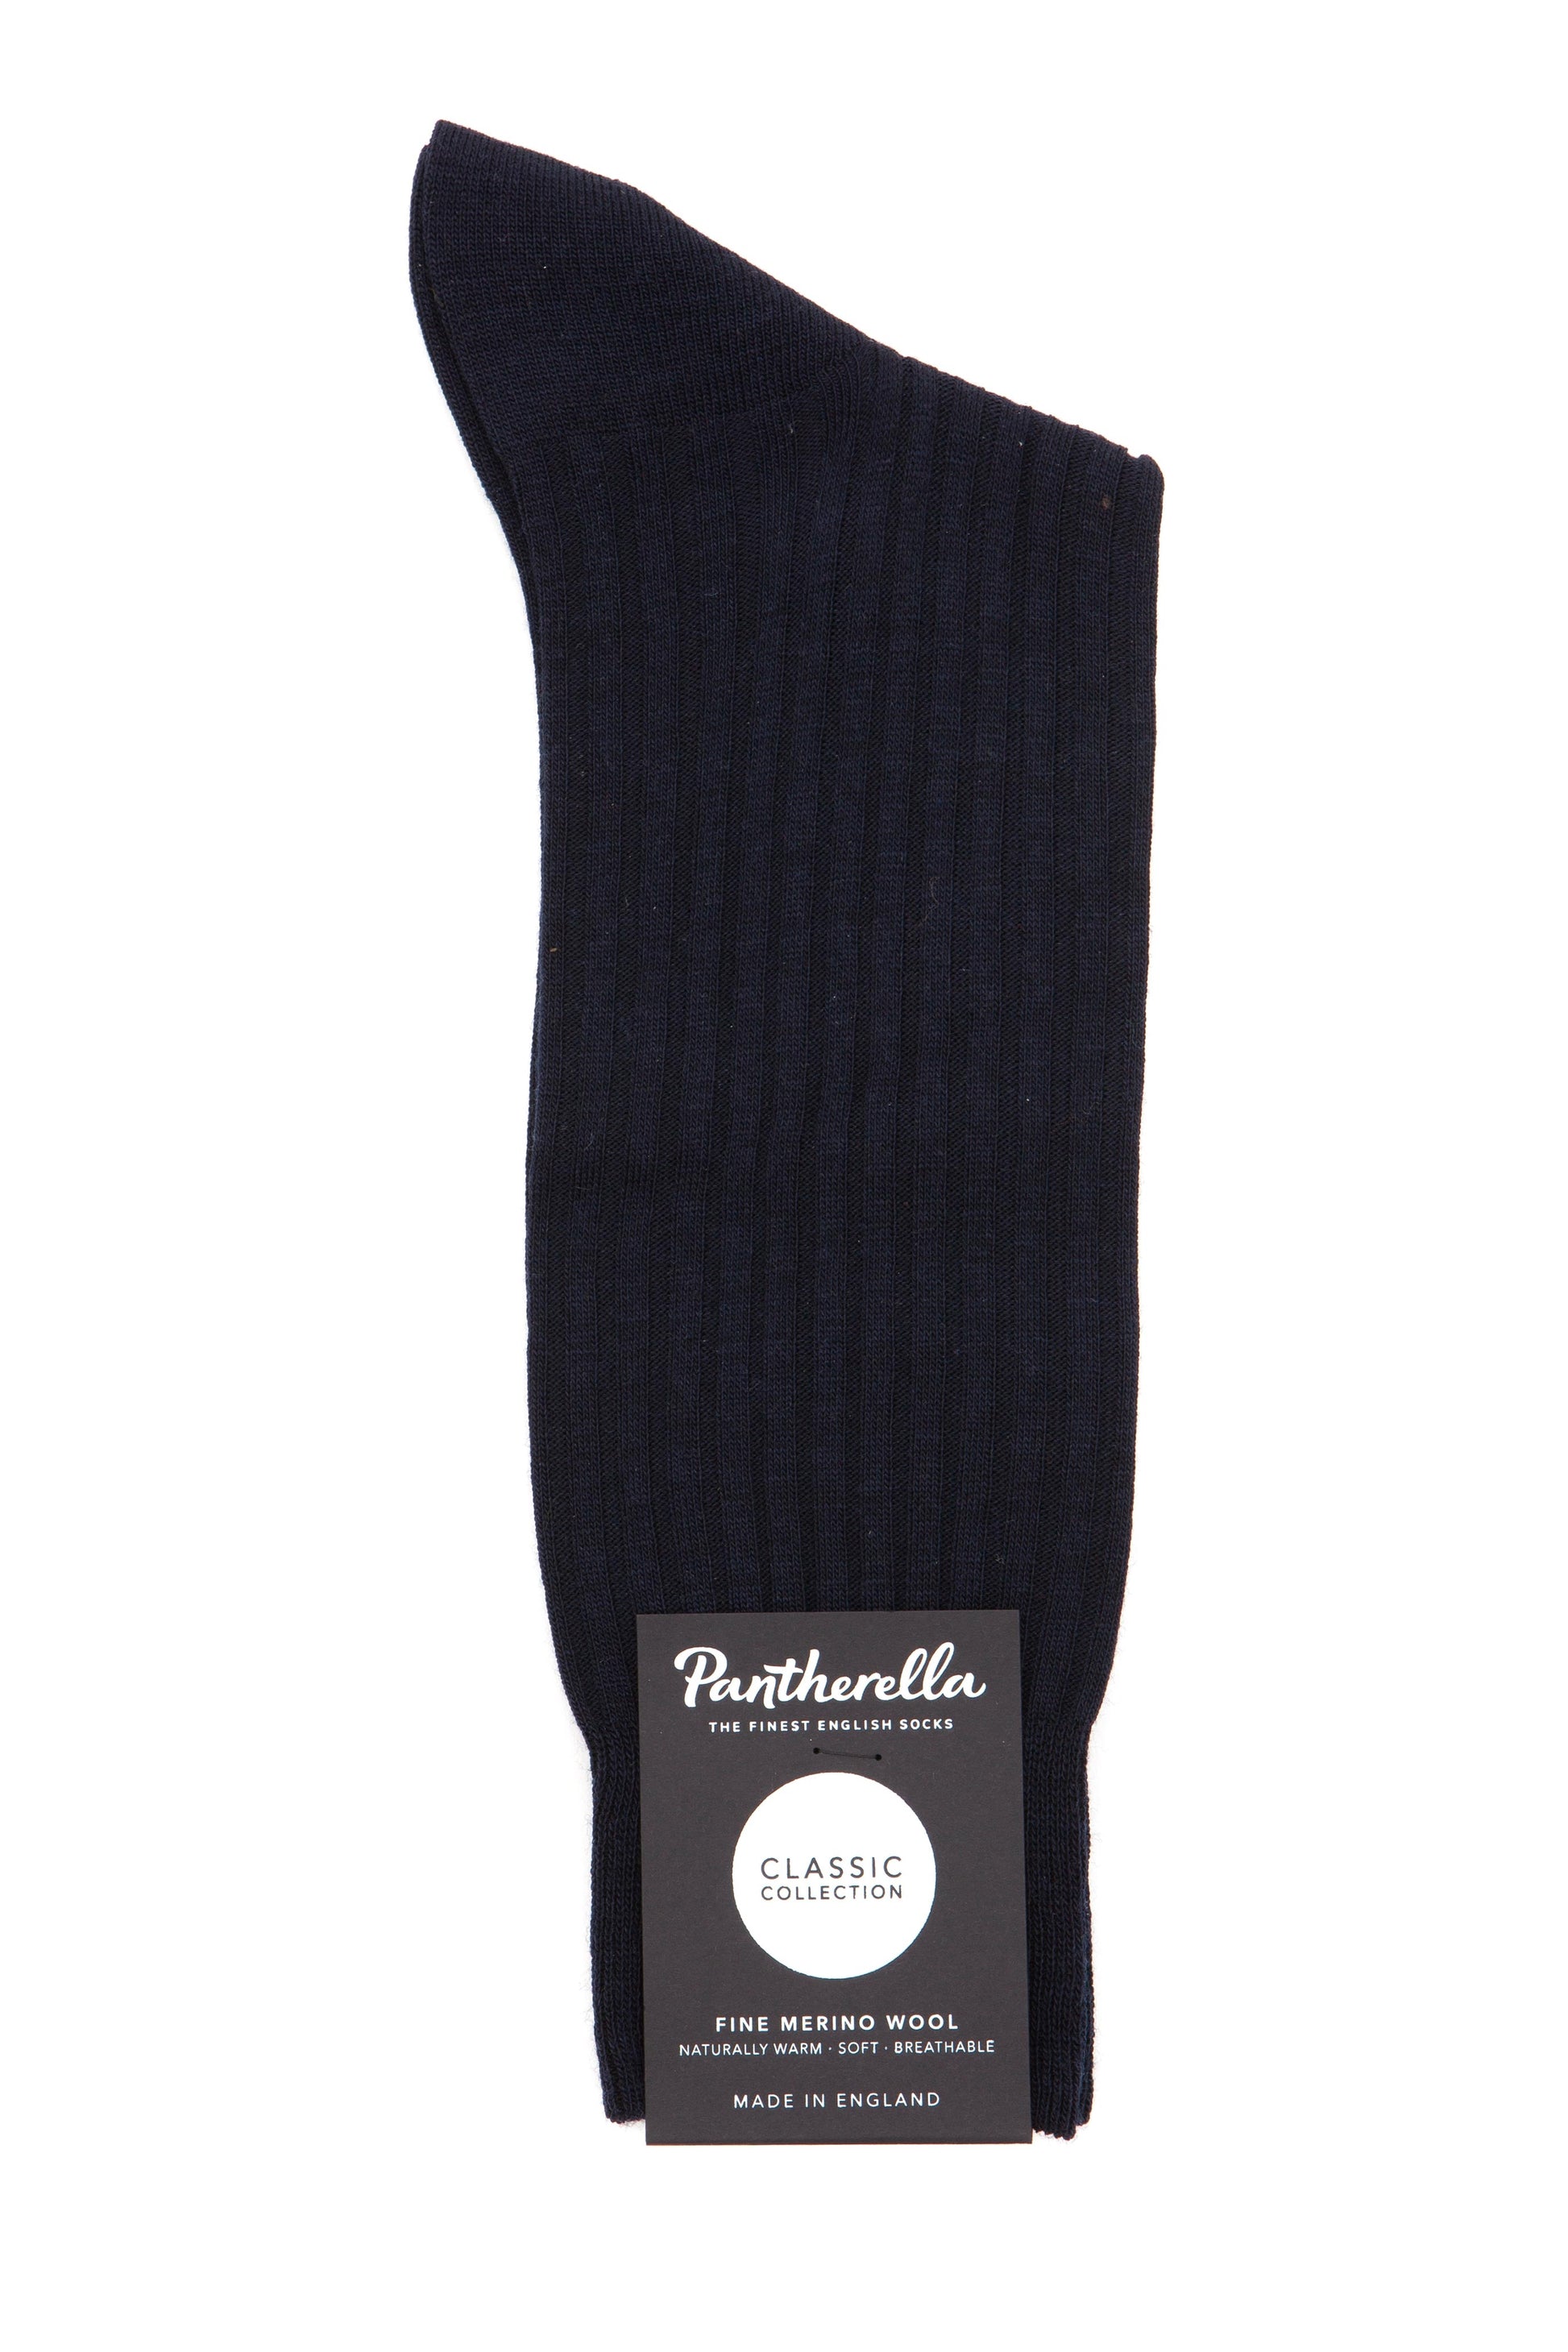 Pantherella - Socks Laburnum - Classic Collection - Navy - Merino Wool - Regent Tailoring